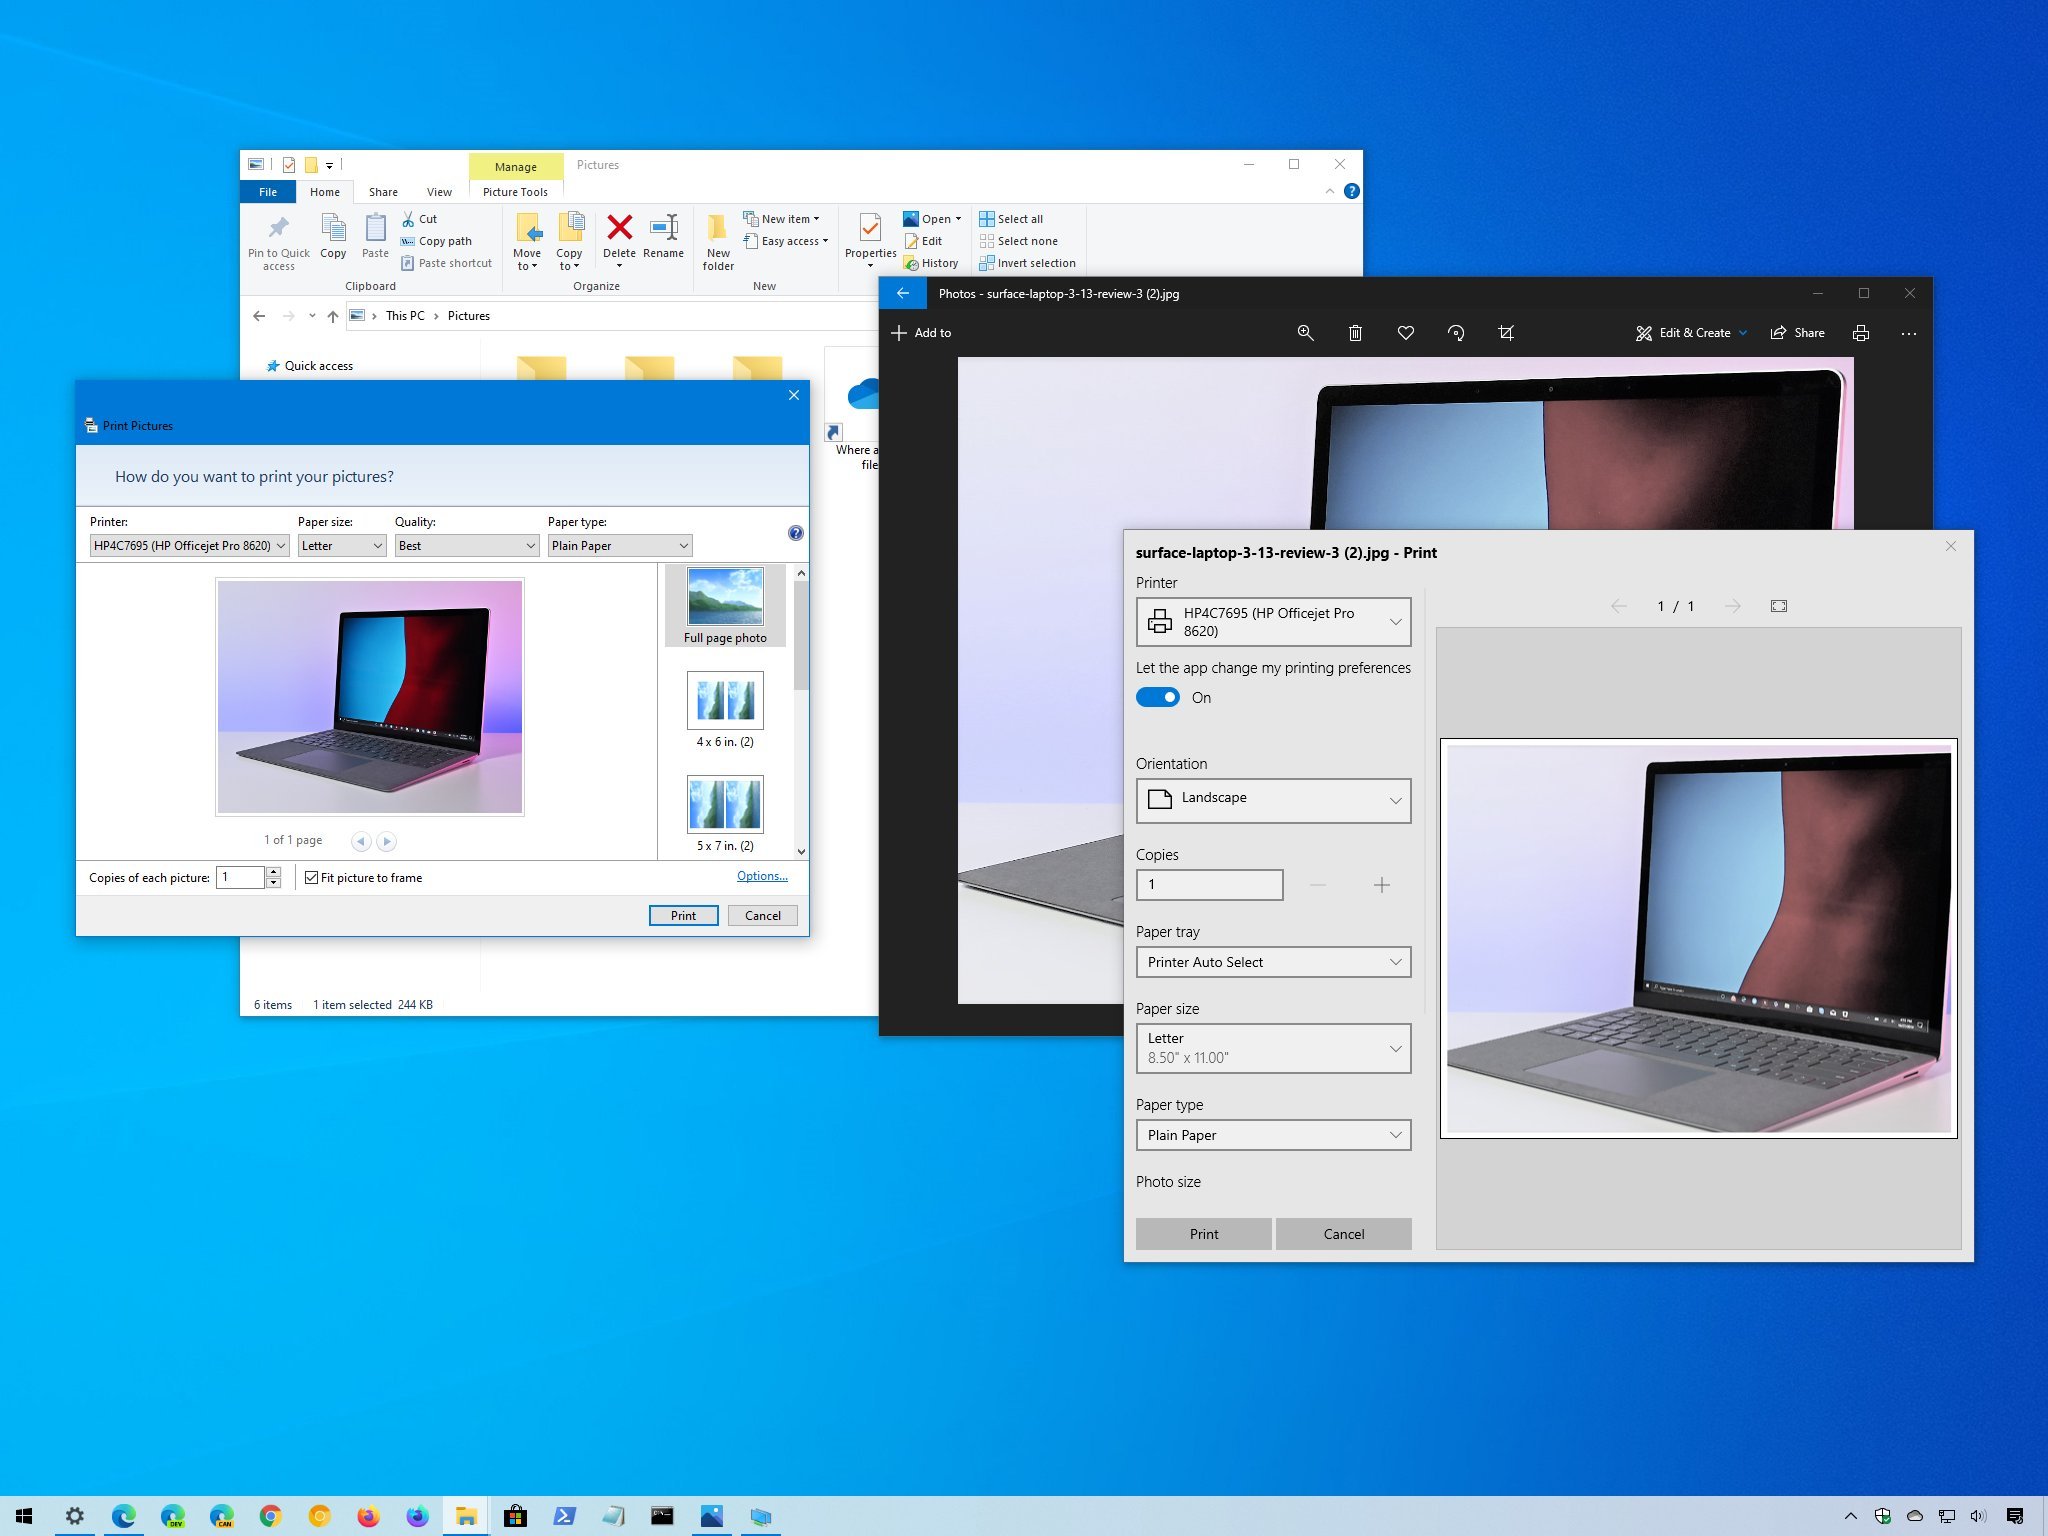 Rijp Werkelijk Draai vast How to print pictures on Windows 10 | Windows Central